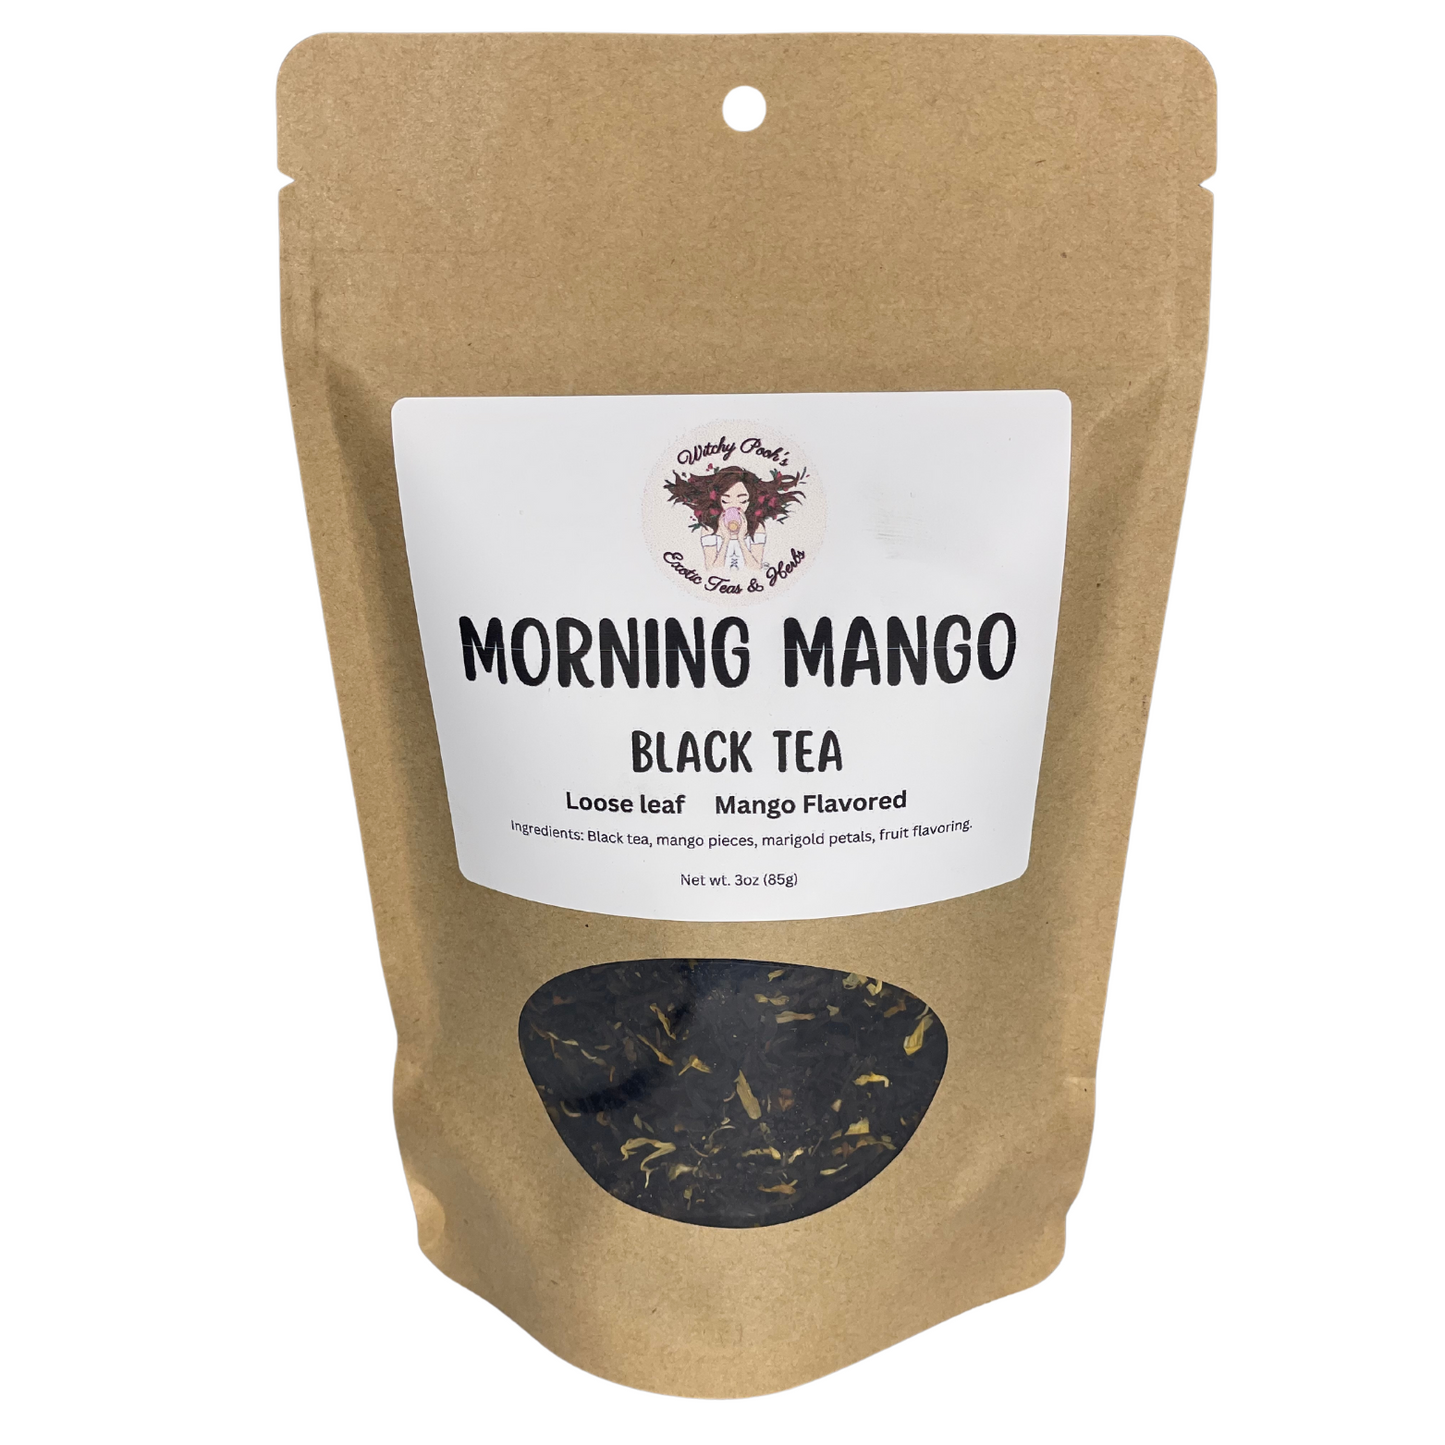 Witchy Pooh's Morning Mango Loose Leaf Mango Fruit Flavored Black Tea